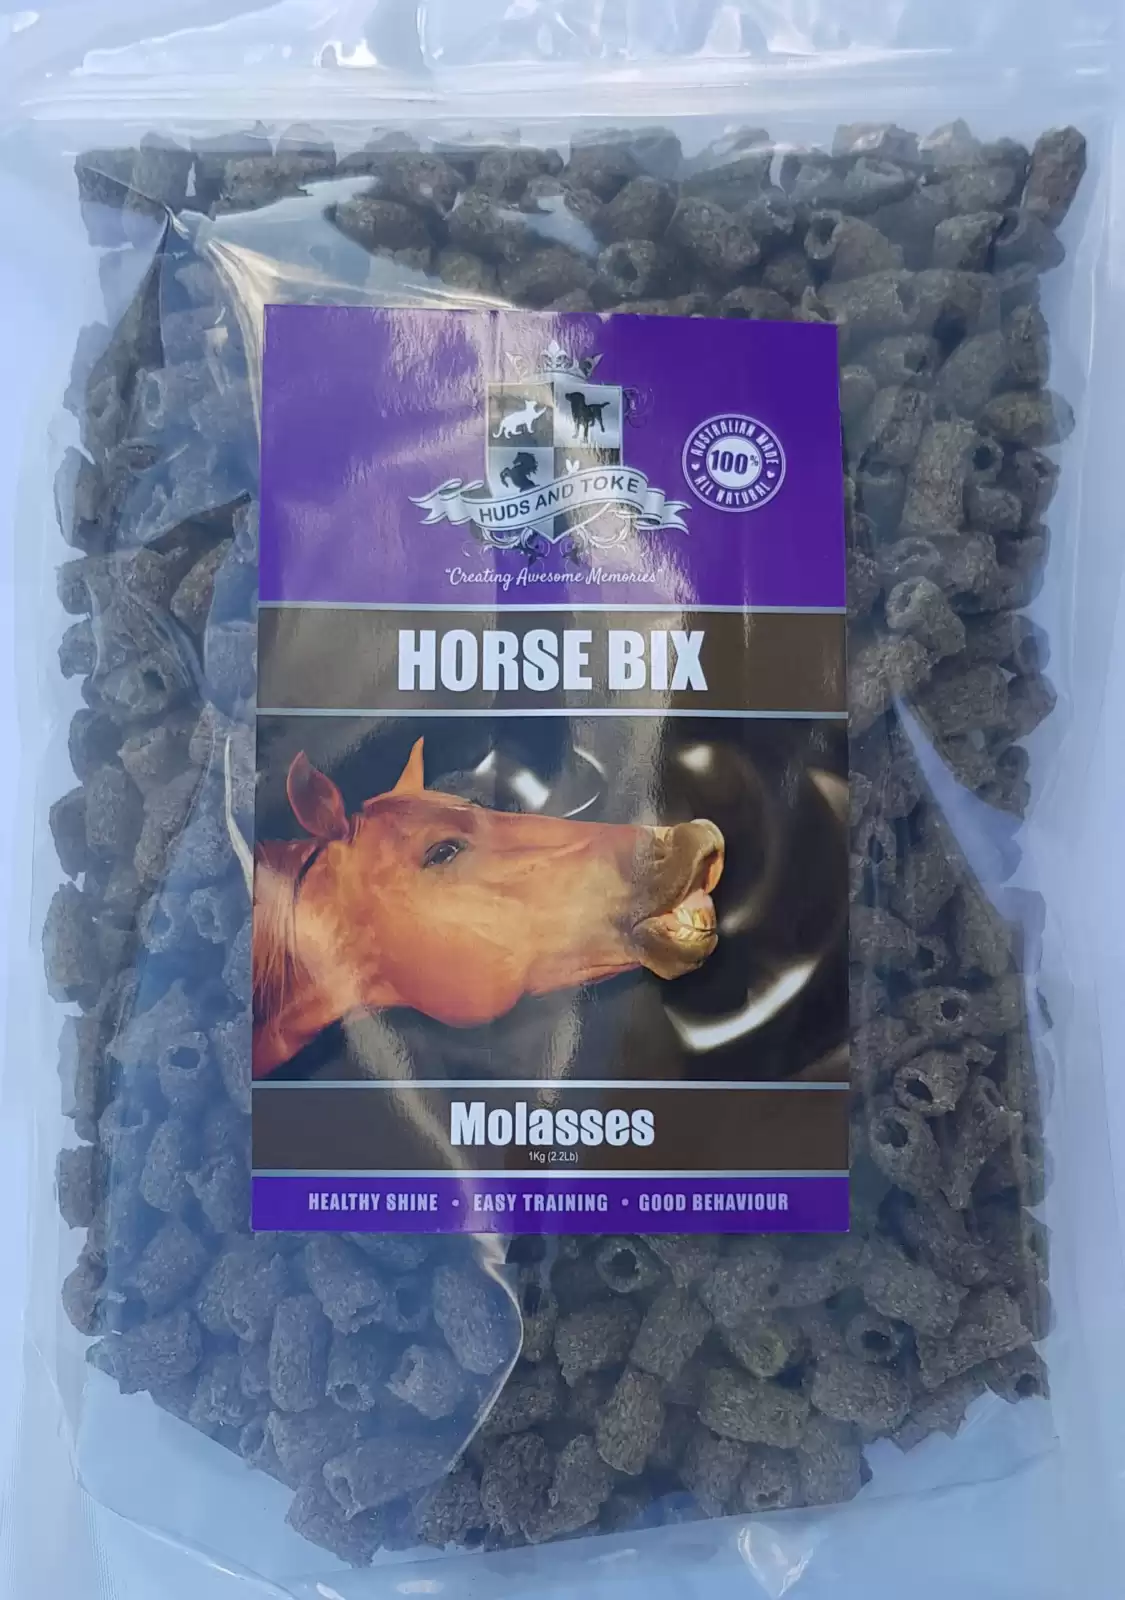 Huds & Toke Molasses Horse Bix – 1kg